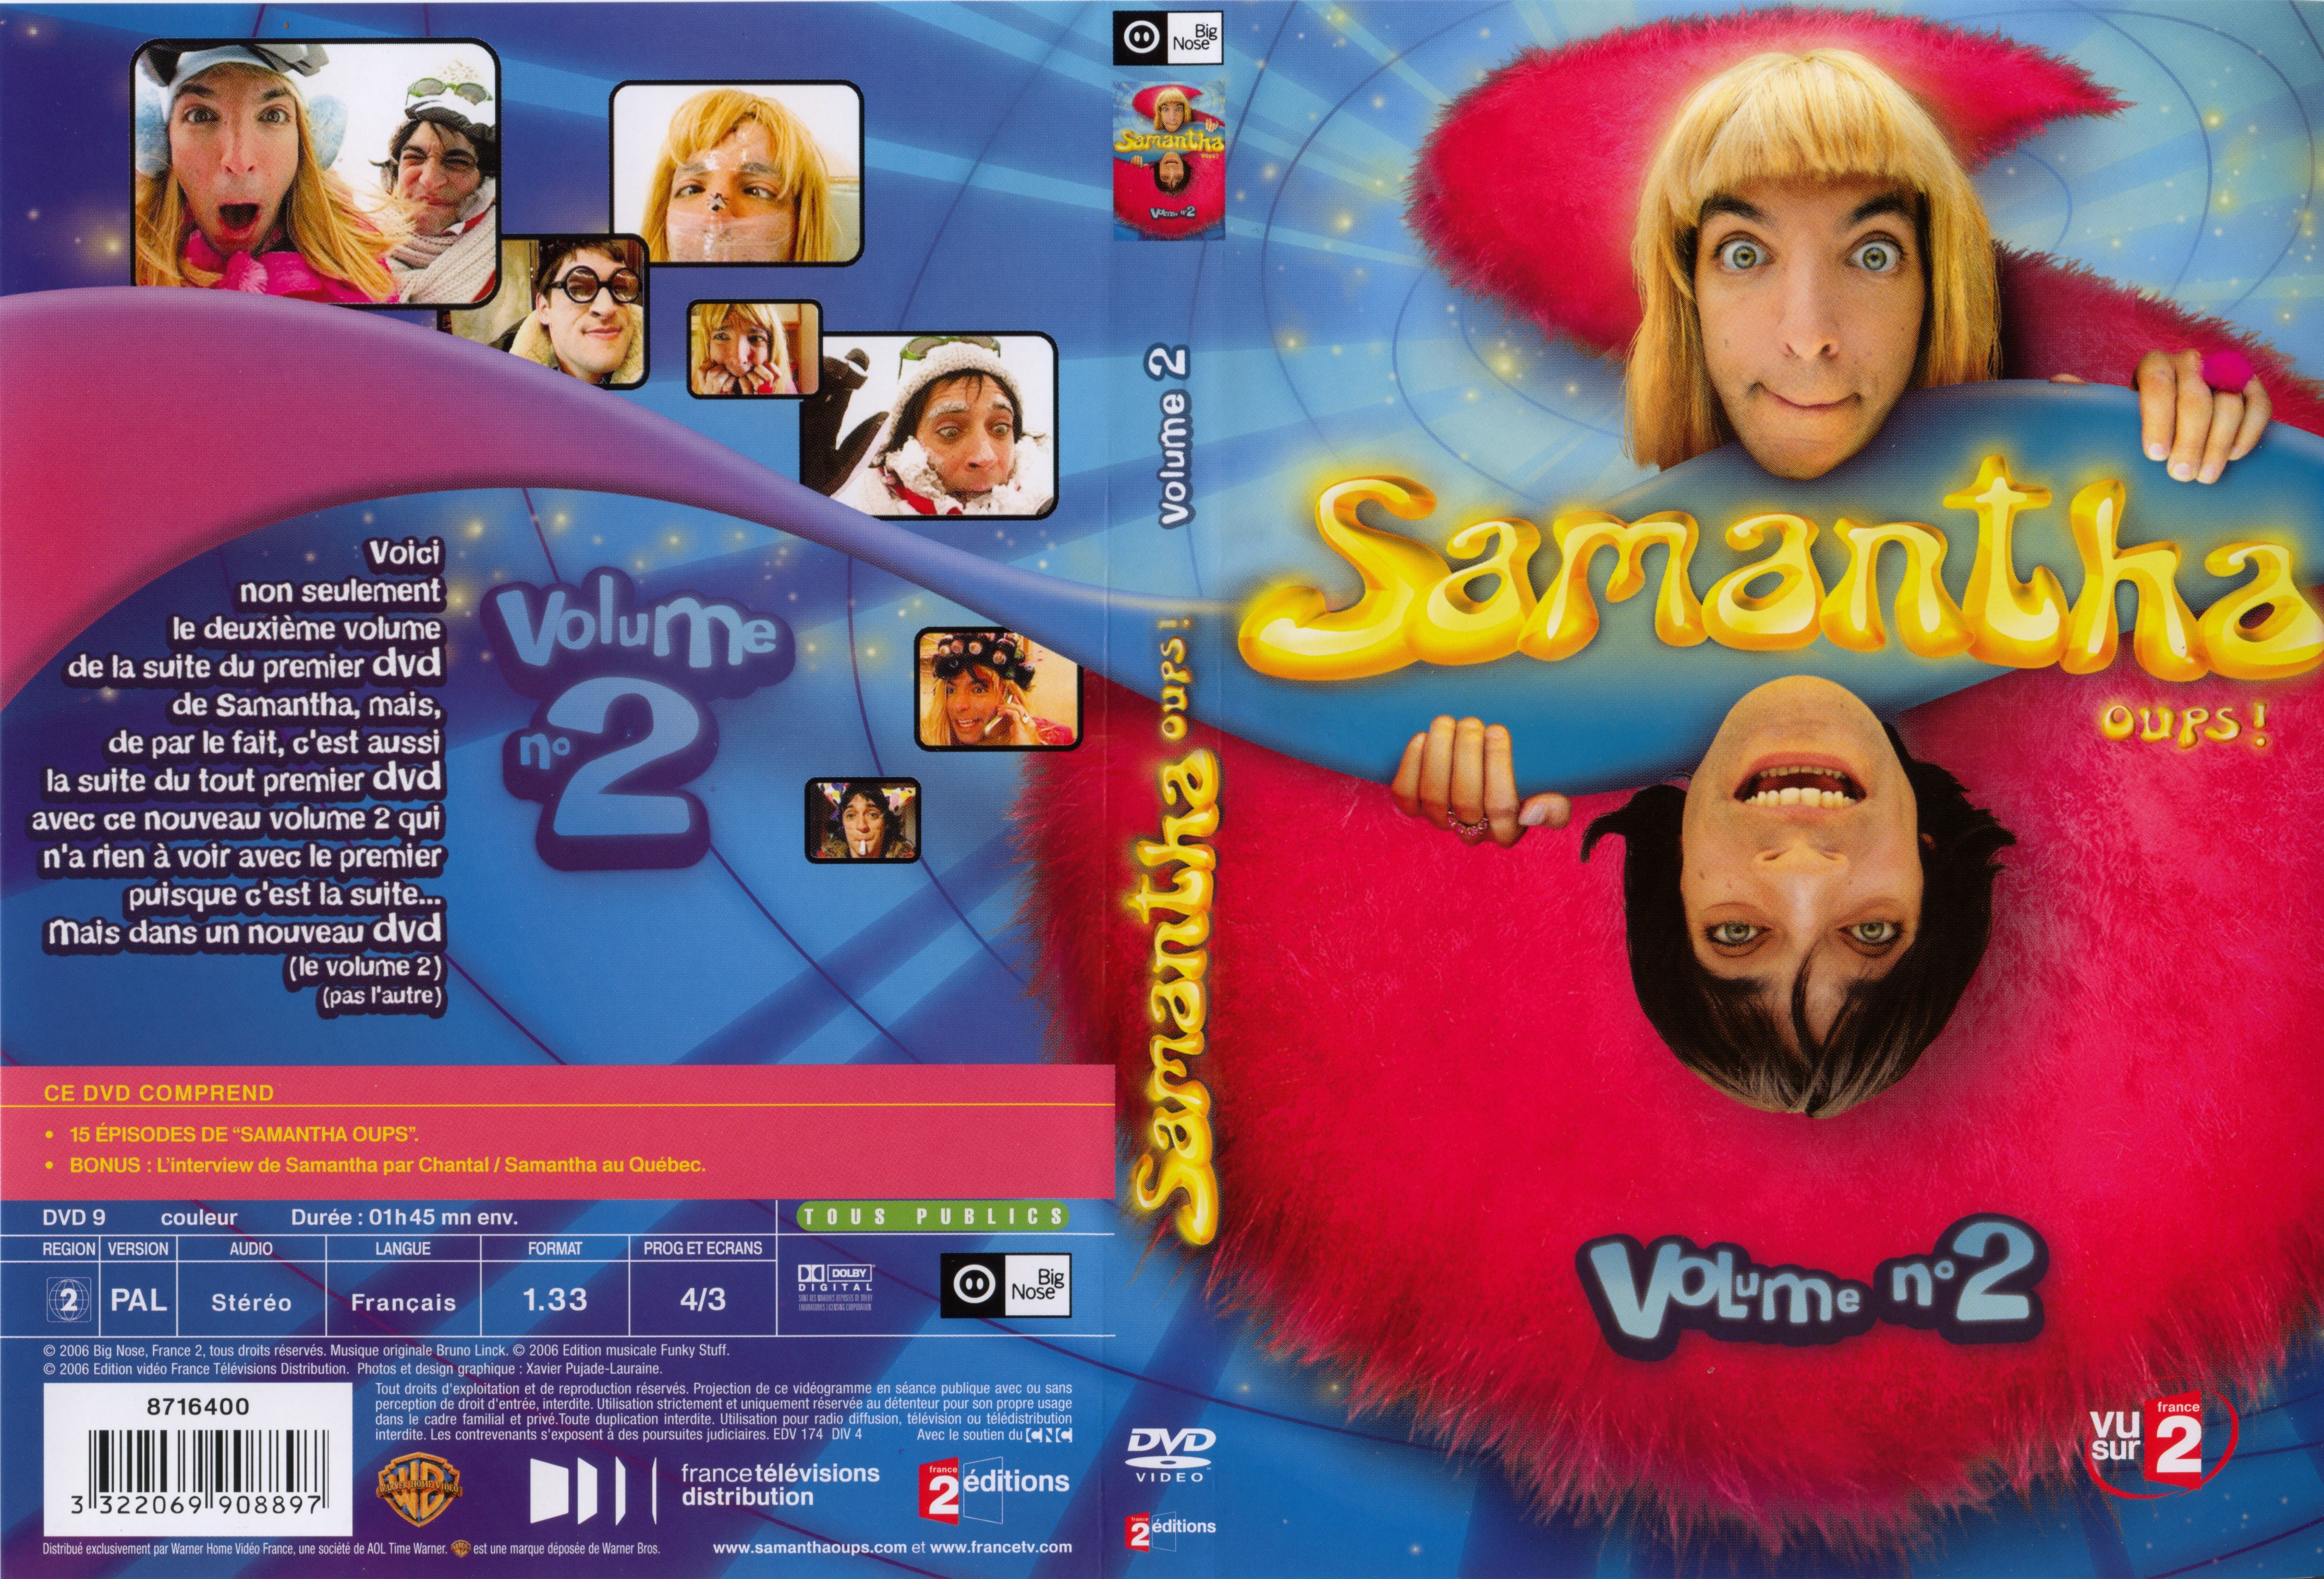 Jaquette DVD Samantha oups vol 2